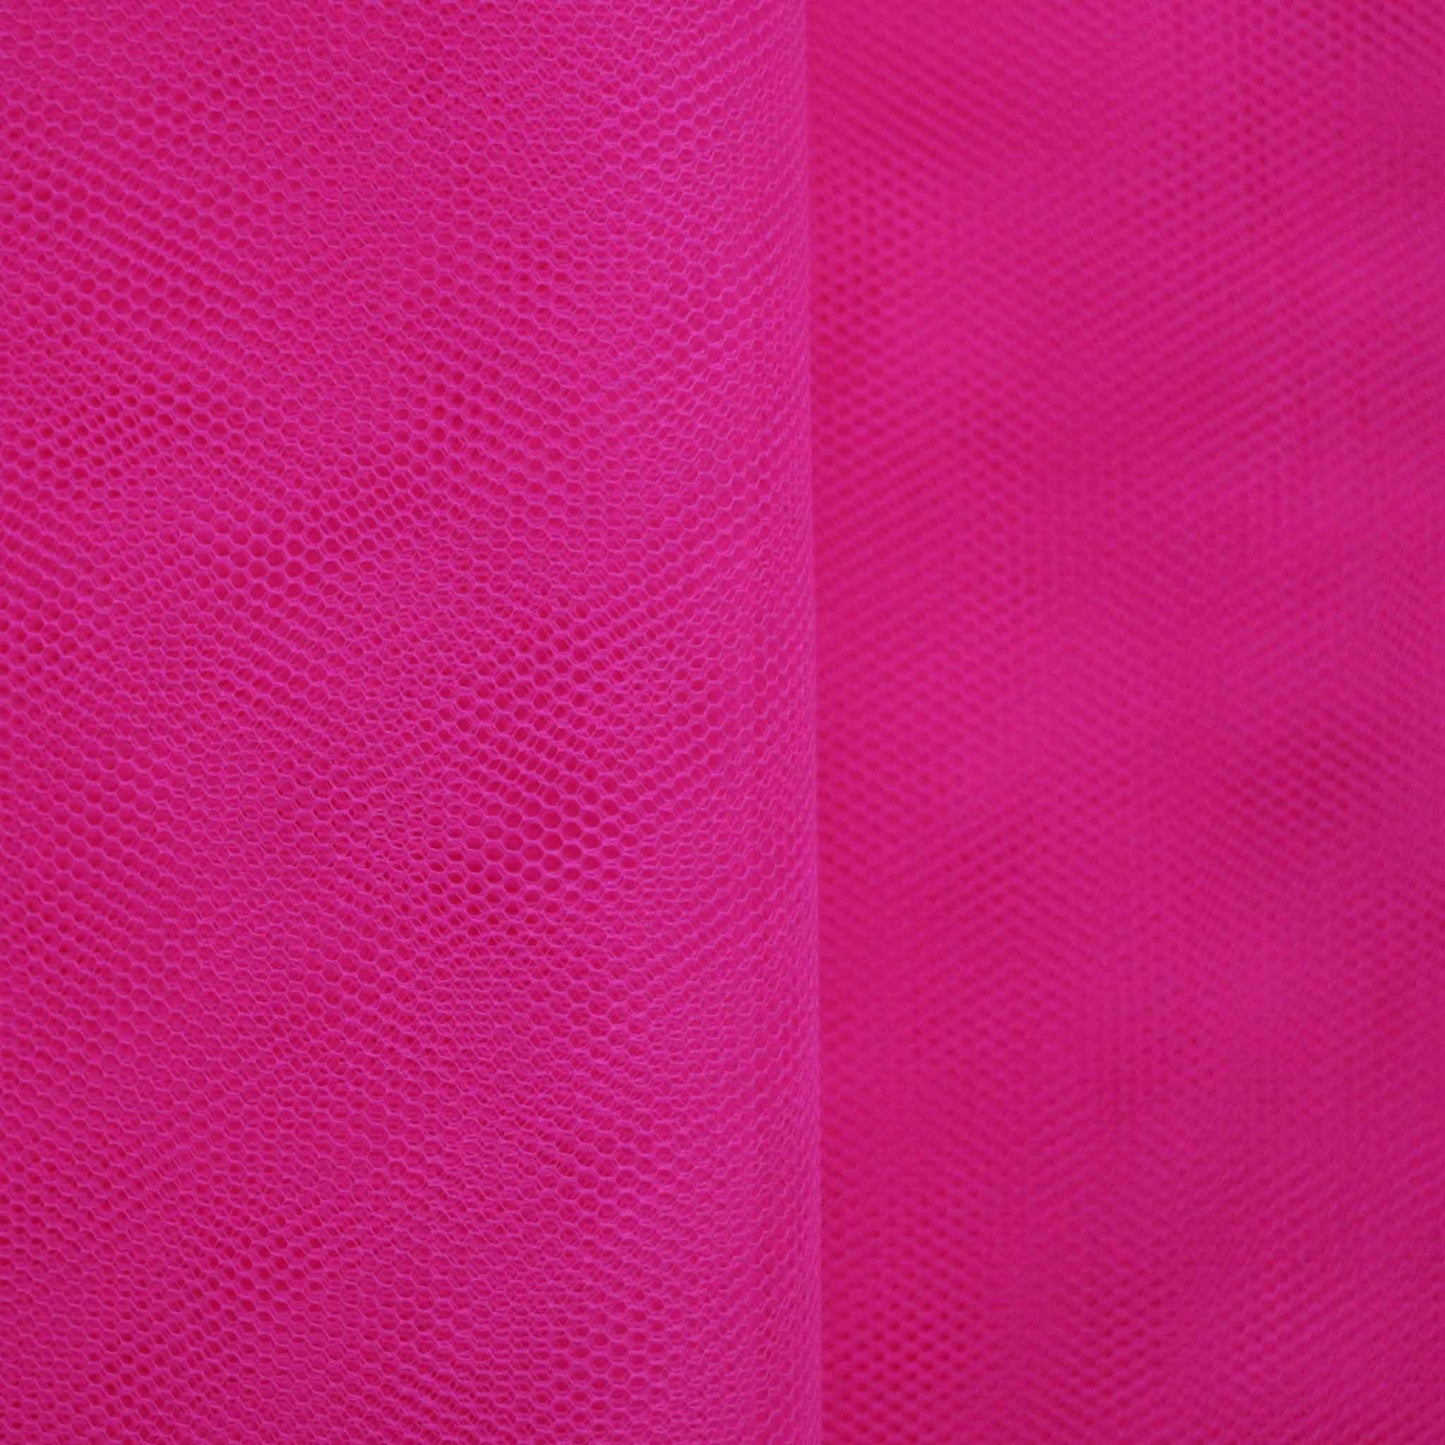 pink dressmaking netting tulle fabric